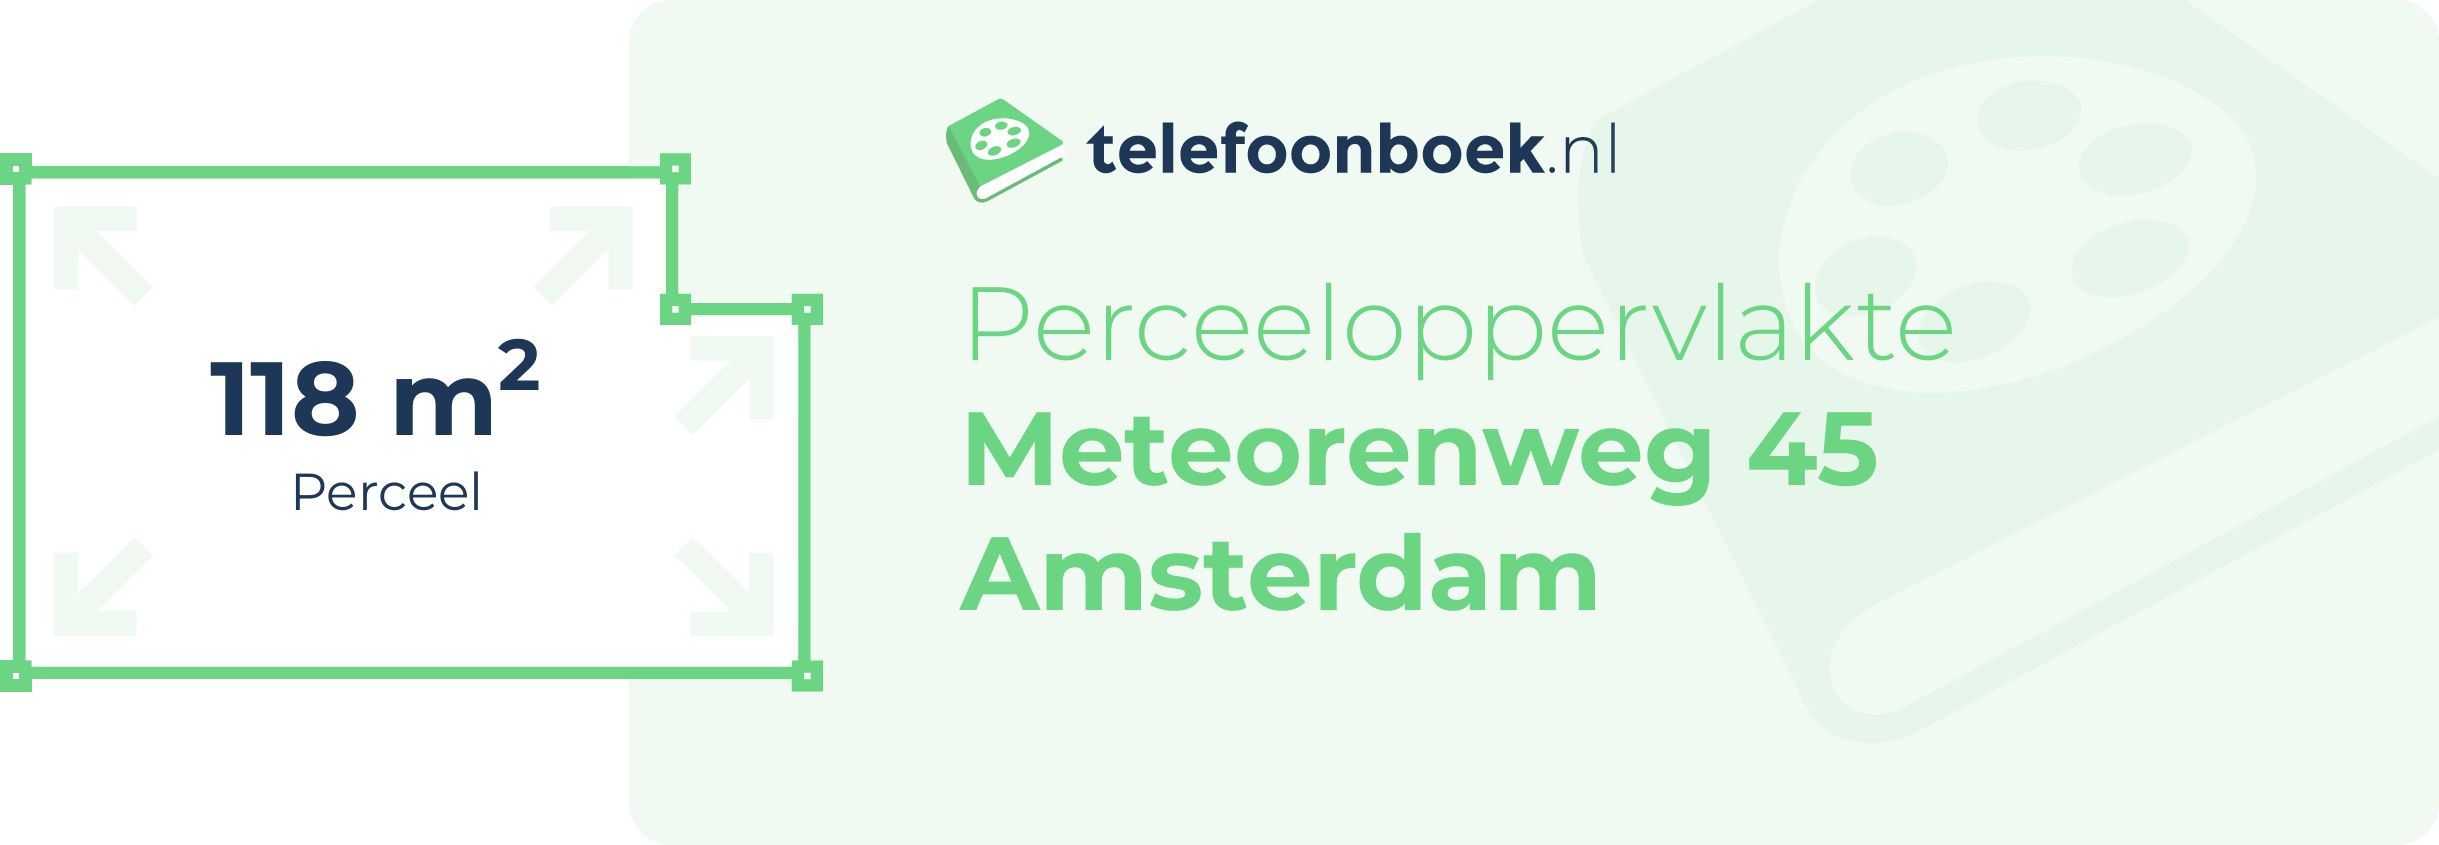 Perceeloppervlakte Meteorenweg 45 Amsterdam